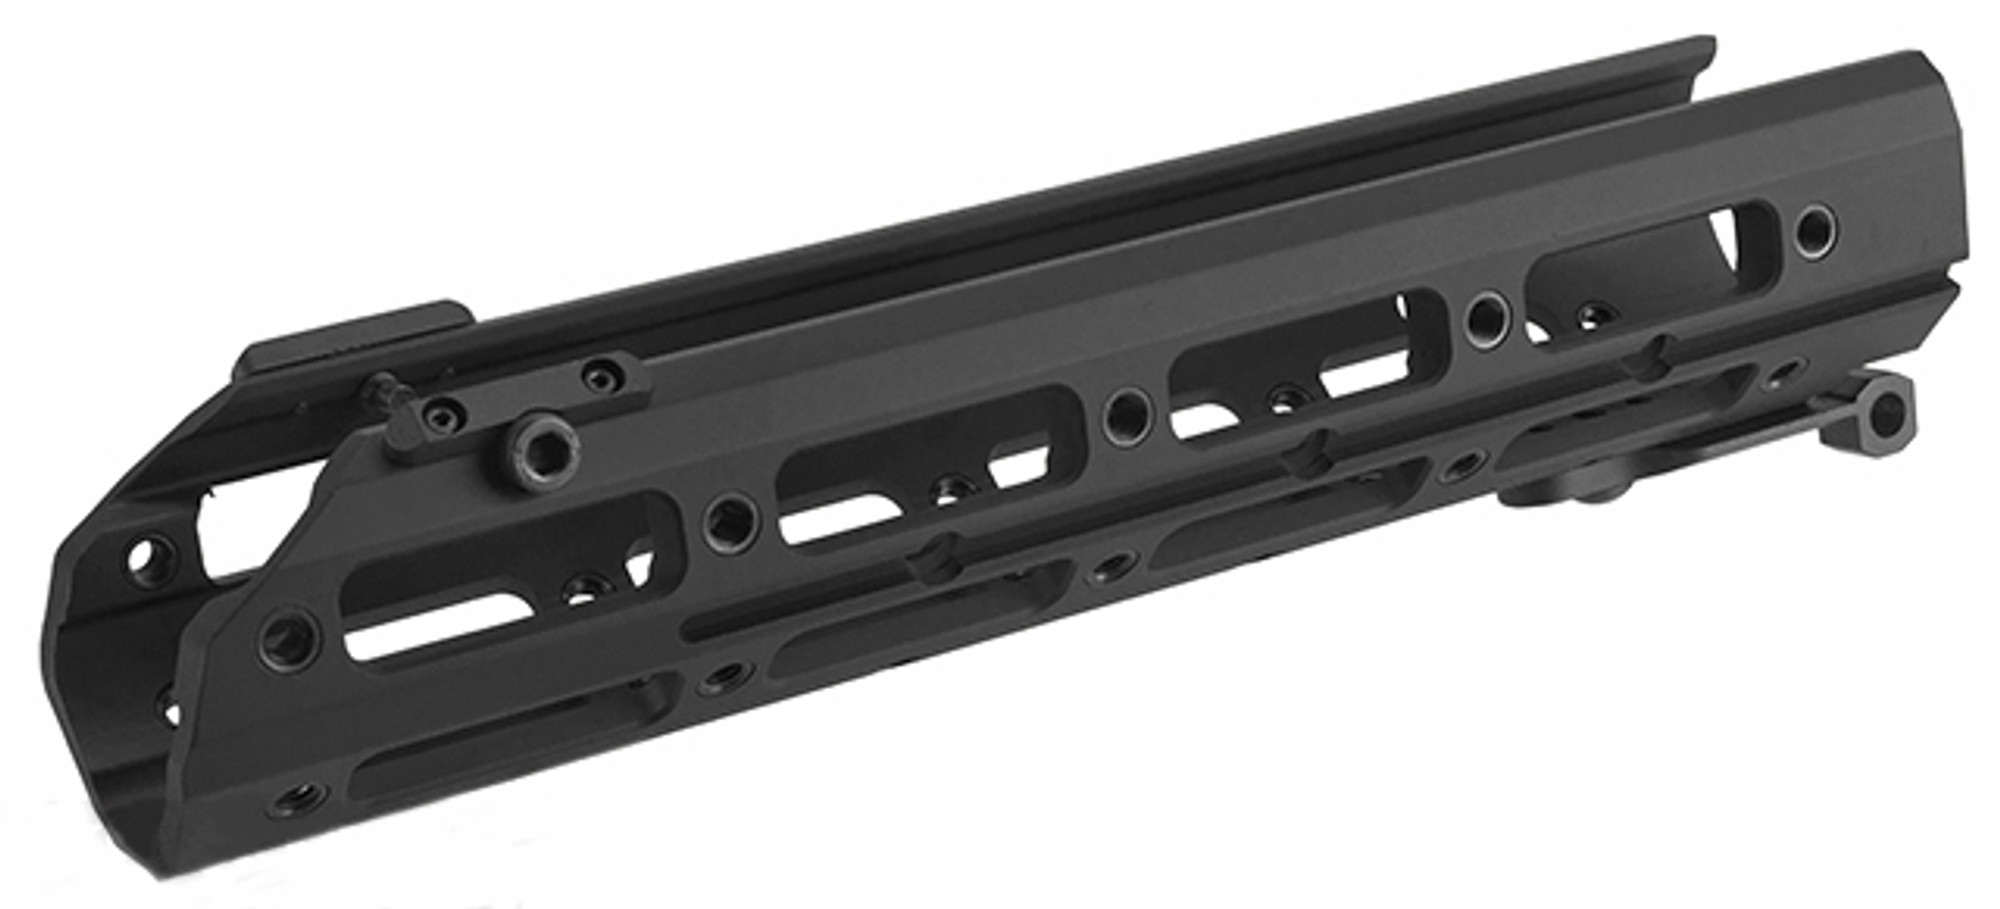 WE-Tech Replacement 9.5" Modular Handguard for MSK Series Airsoft GBB Rifles - Part# 11 (Black)